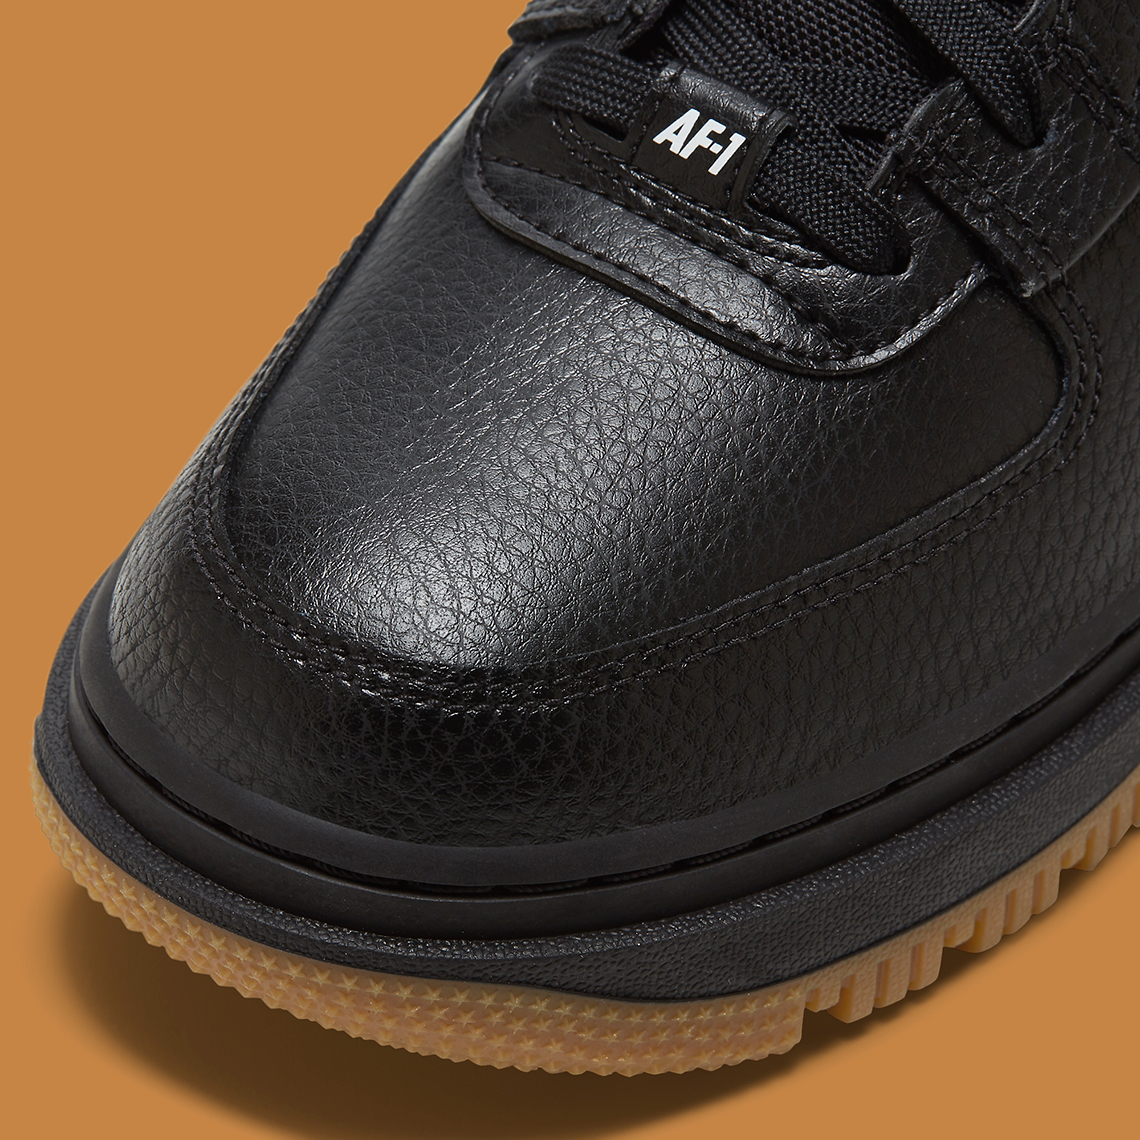 Nike Air Force 1 High Utility 2.0 in Black Gum Release Date